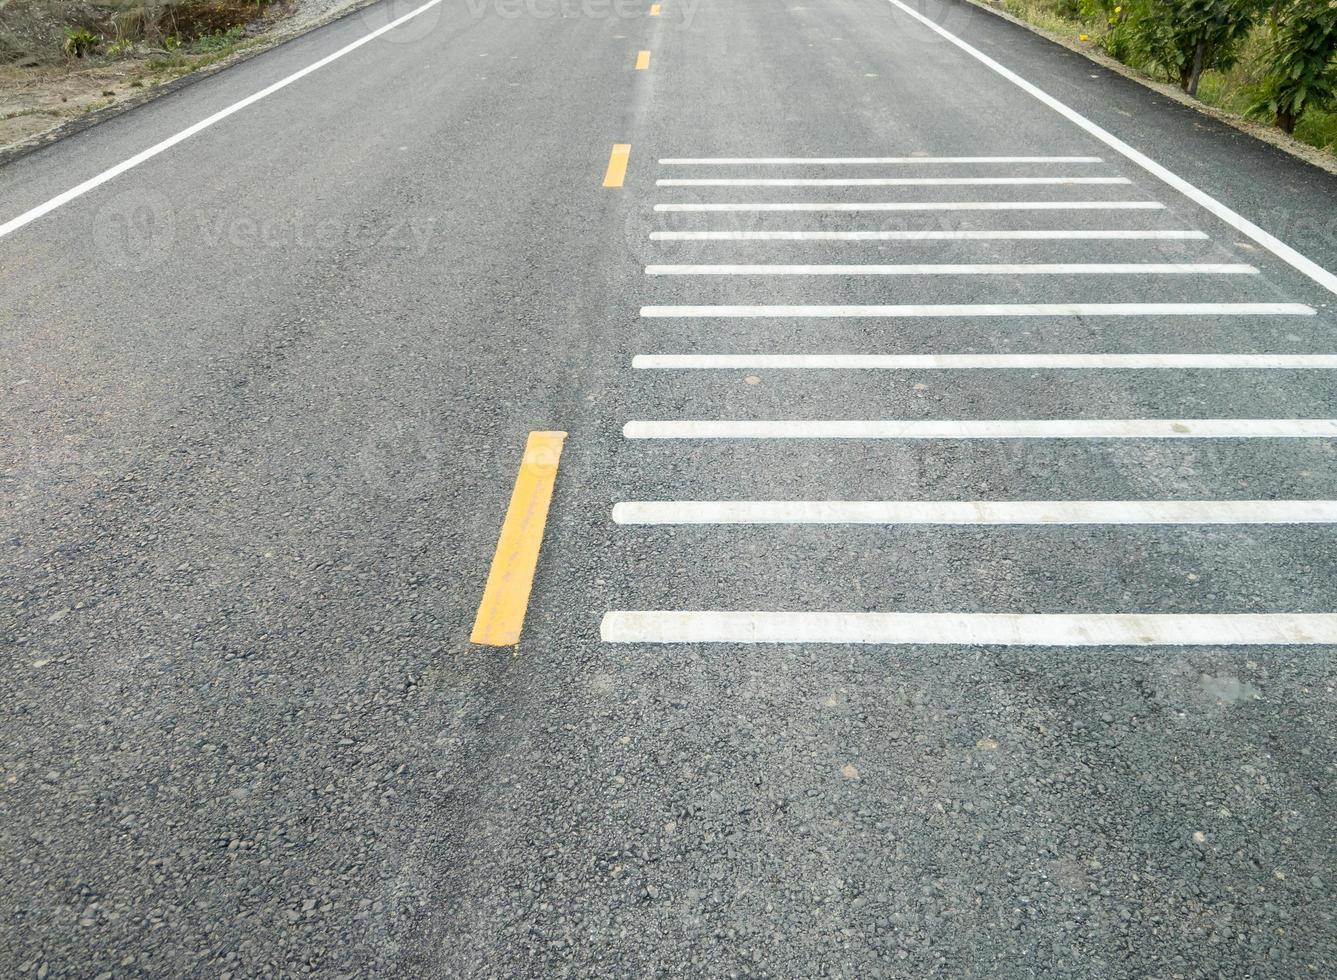 The white transverse rumble strips on the asphalt road. photo